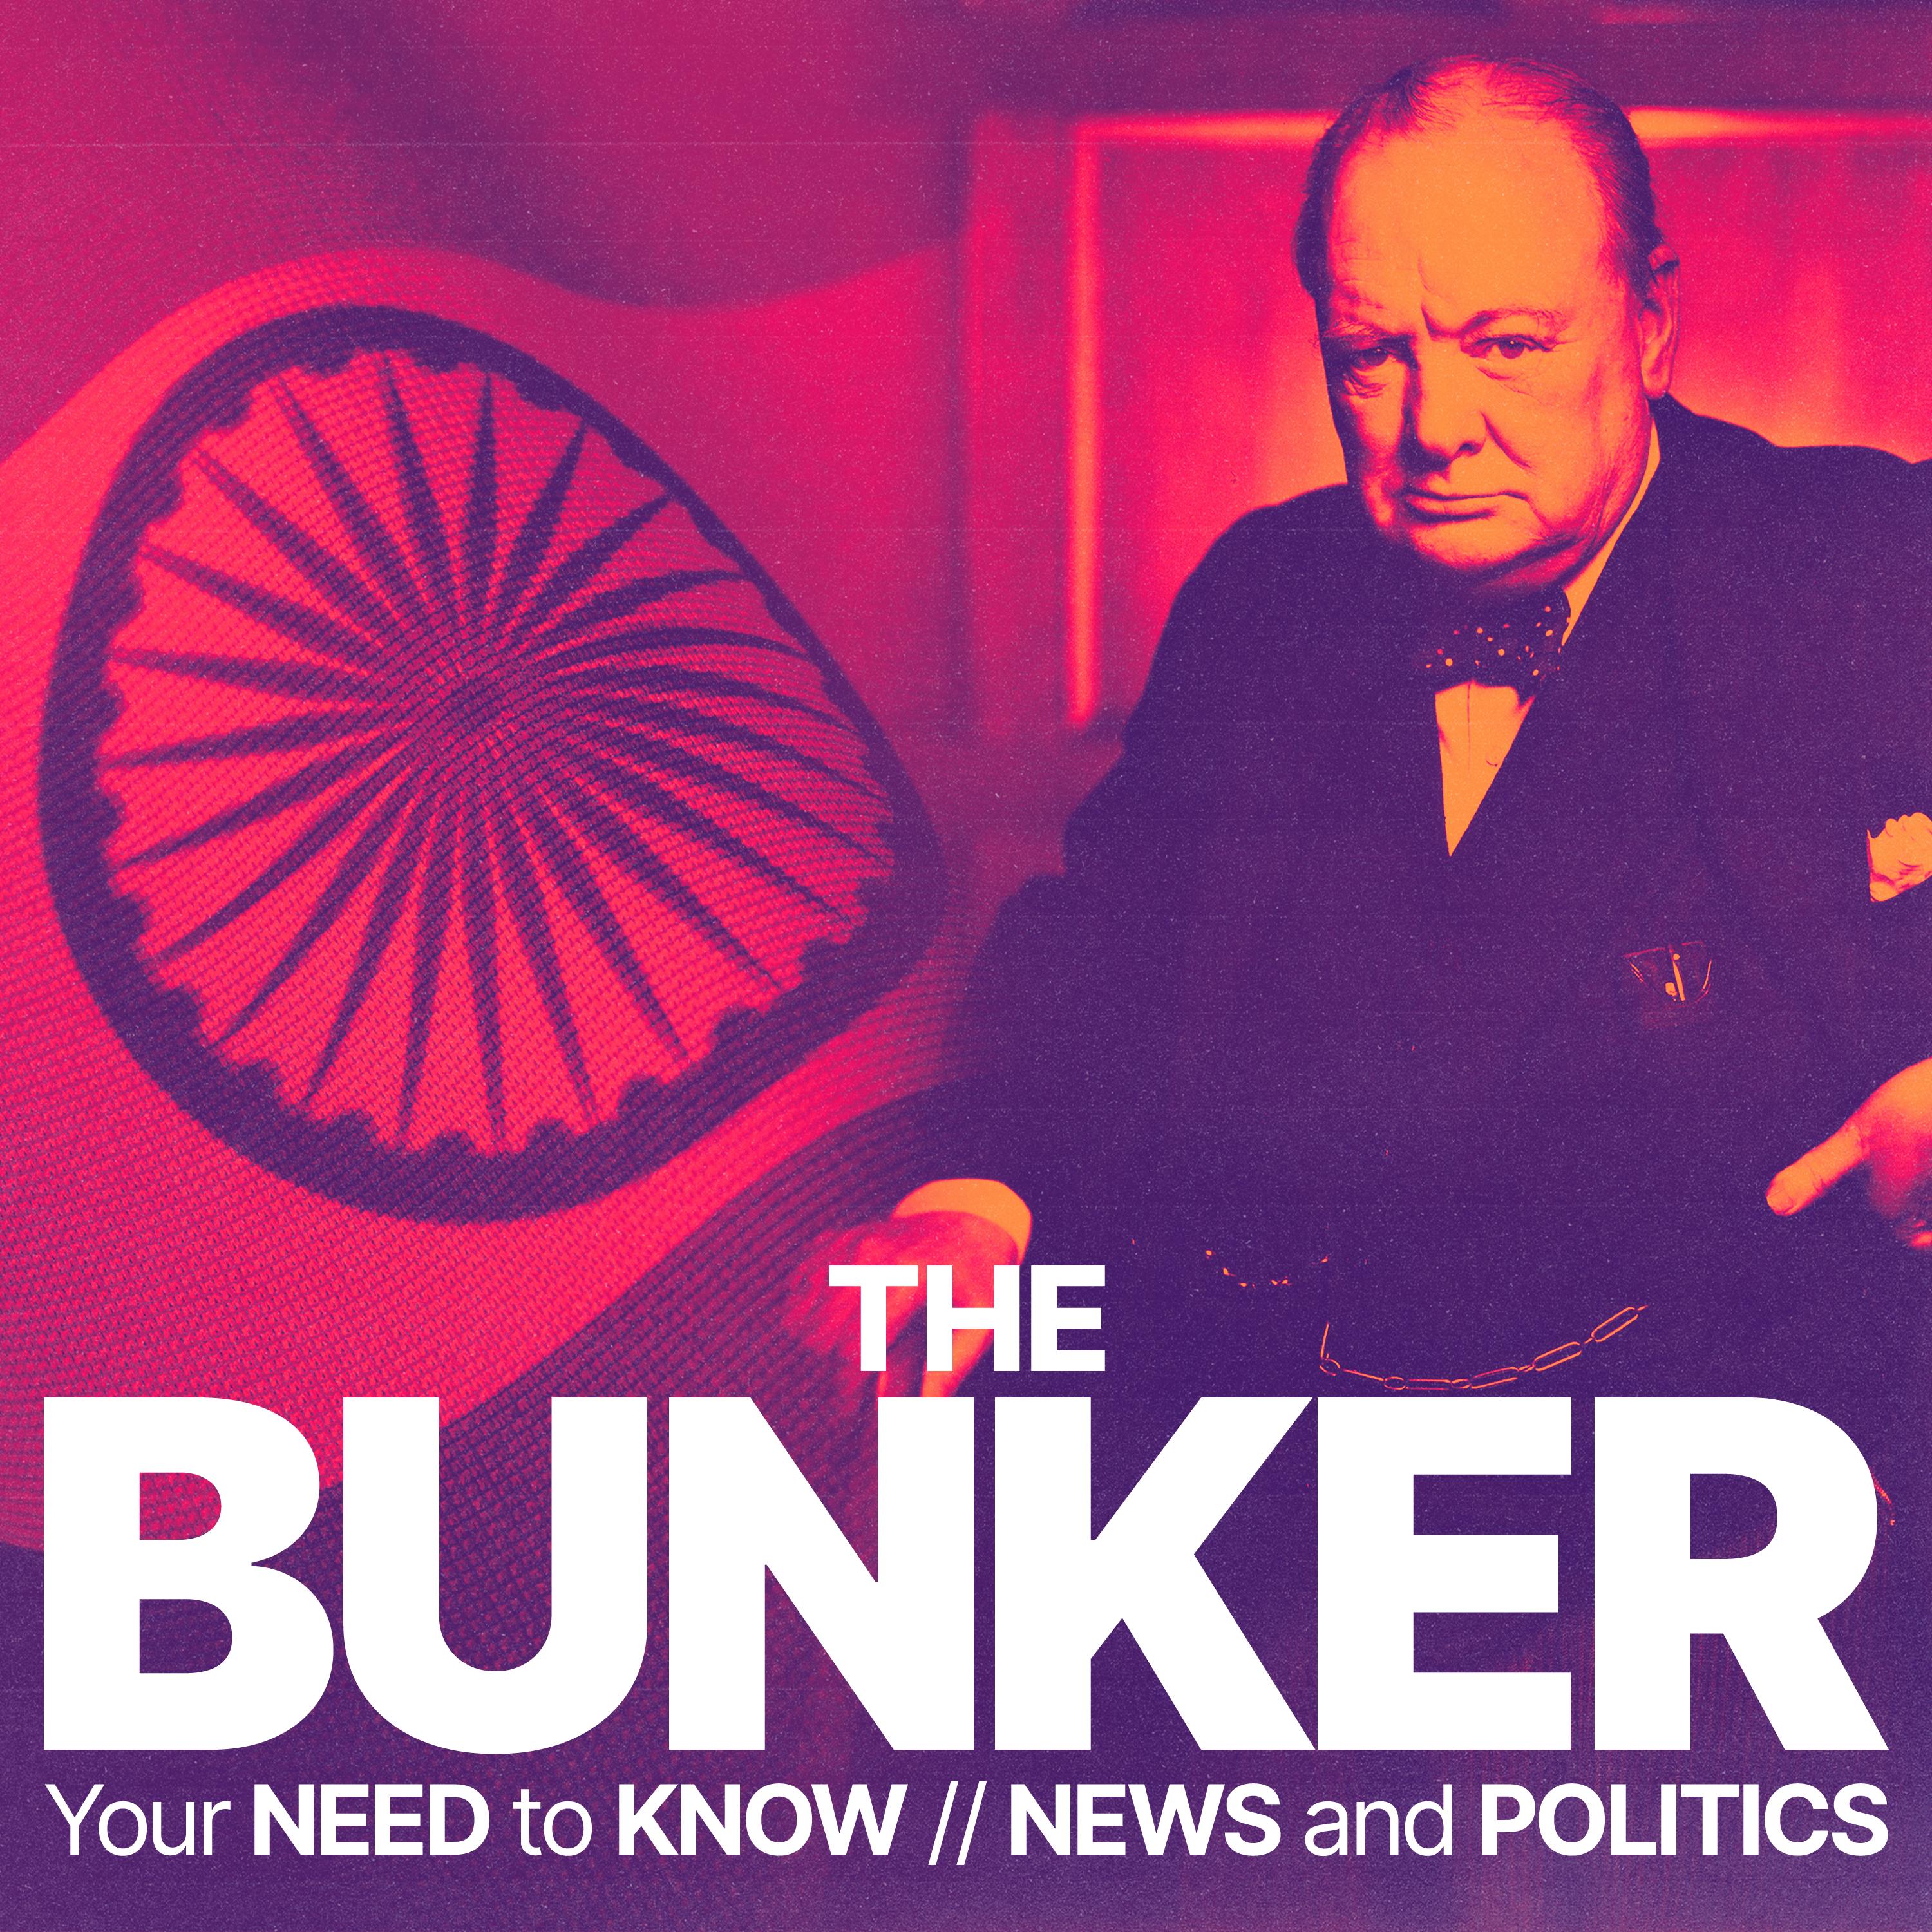 Britain’s hero, India’s war criminal: Churchill’s maddening legacy – with Ahir Shah